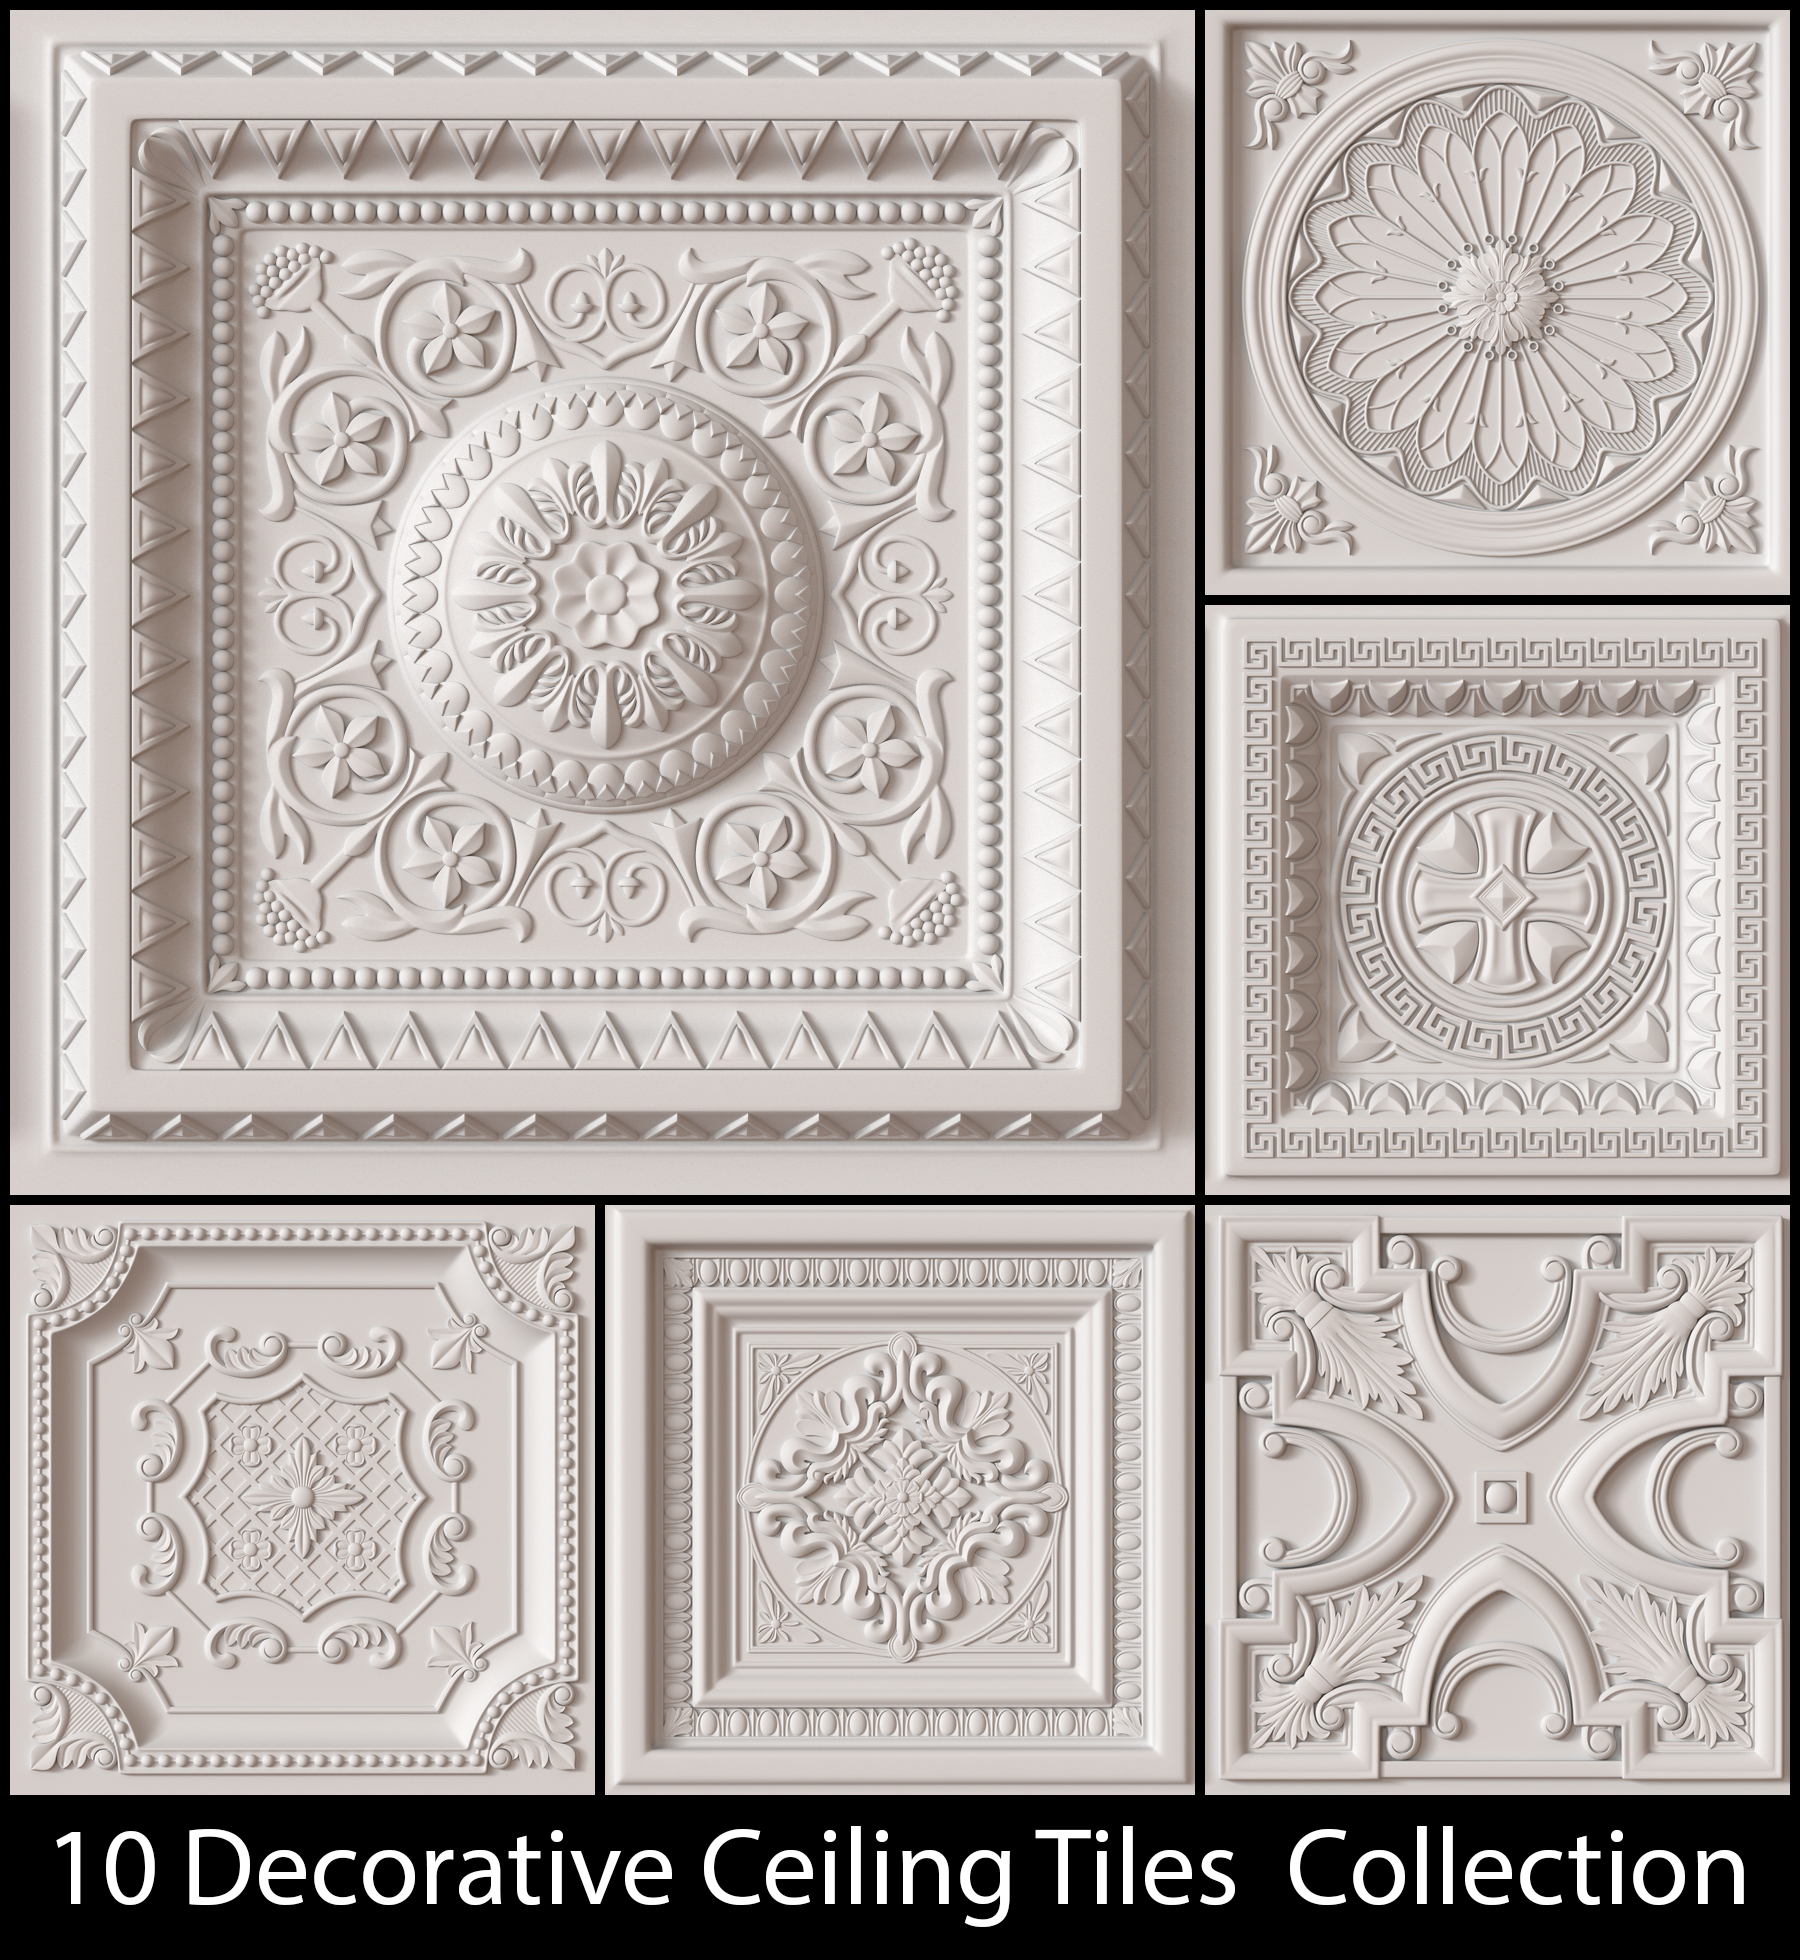 10 Decorative Ceiling Tile Collection